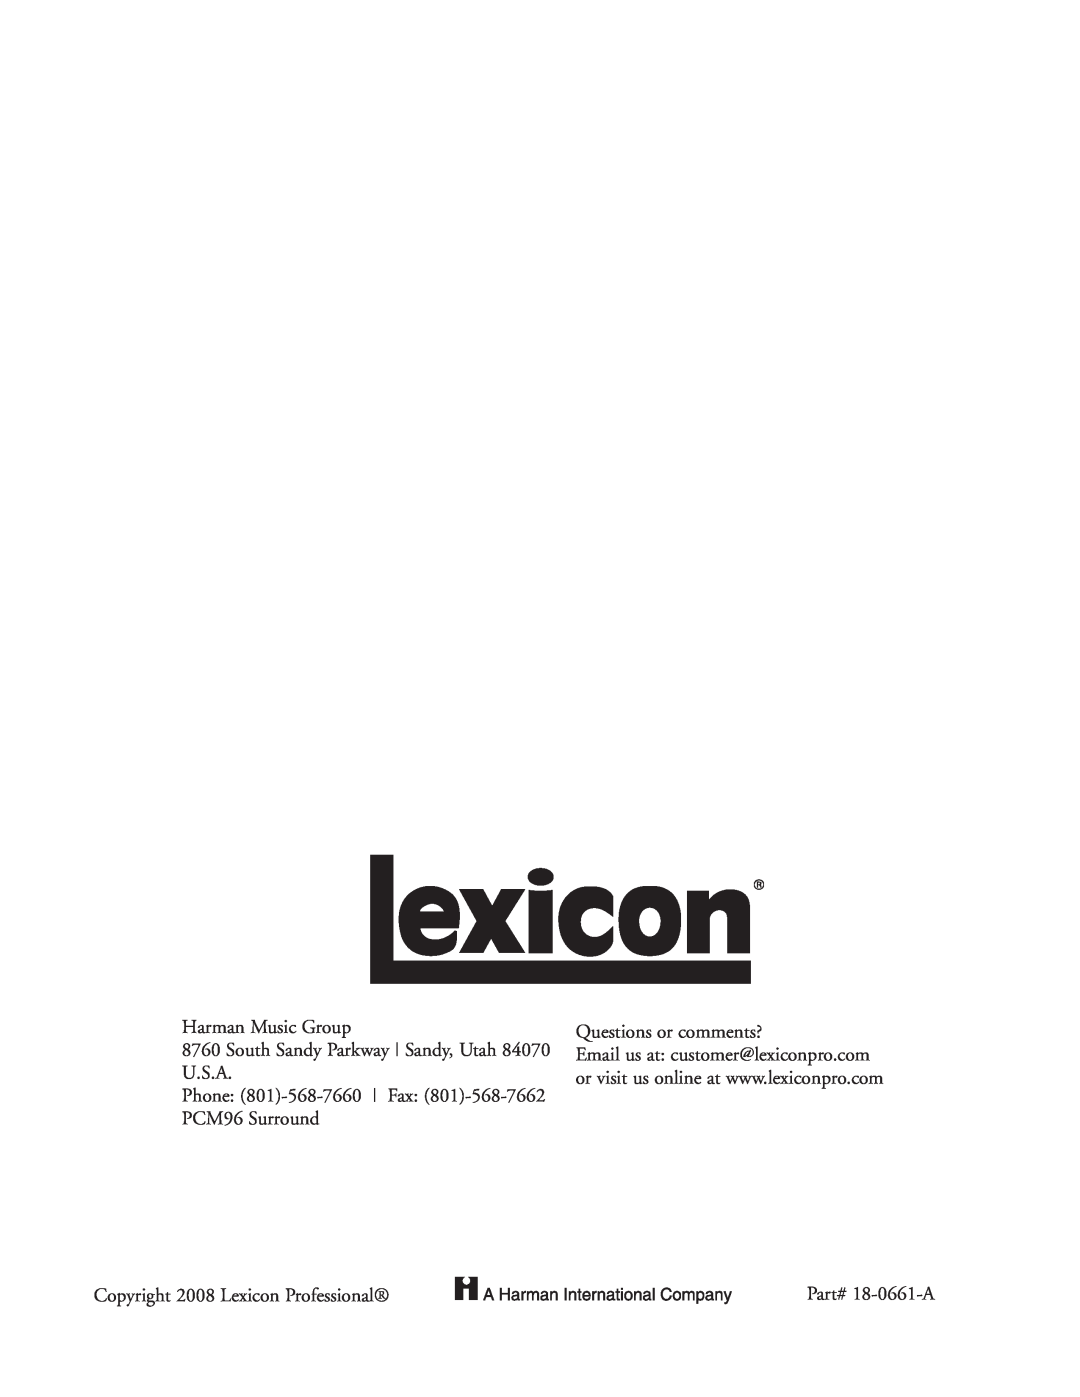 Lexicon manual Harman Music Group, South Sandy Parkway | Sandy, Utah U.S.A, Phone: 801-568-7660| Fax: PCM96 Surround 